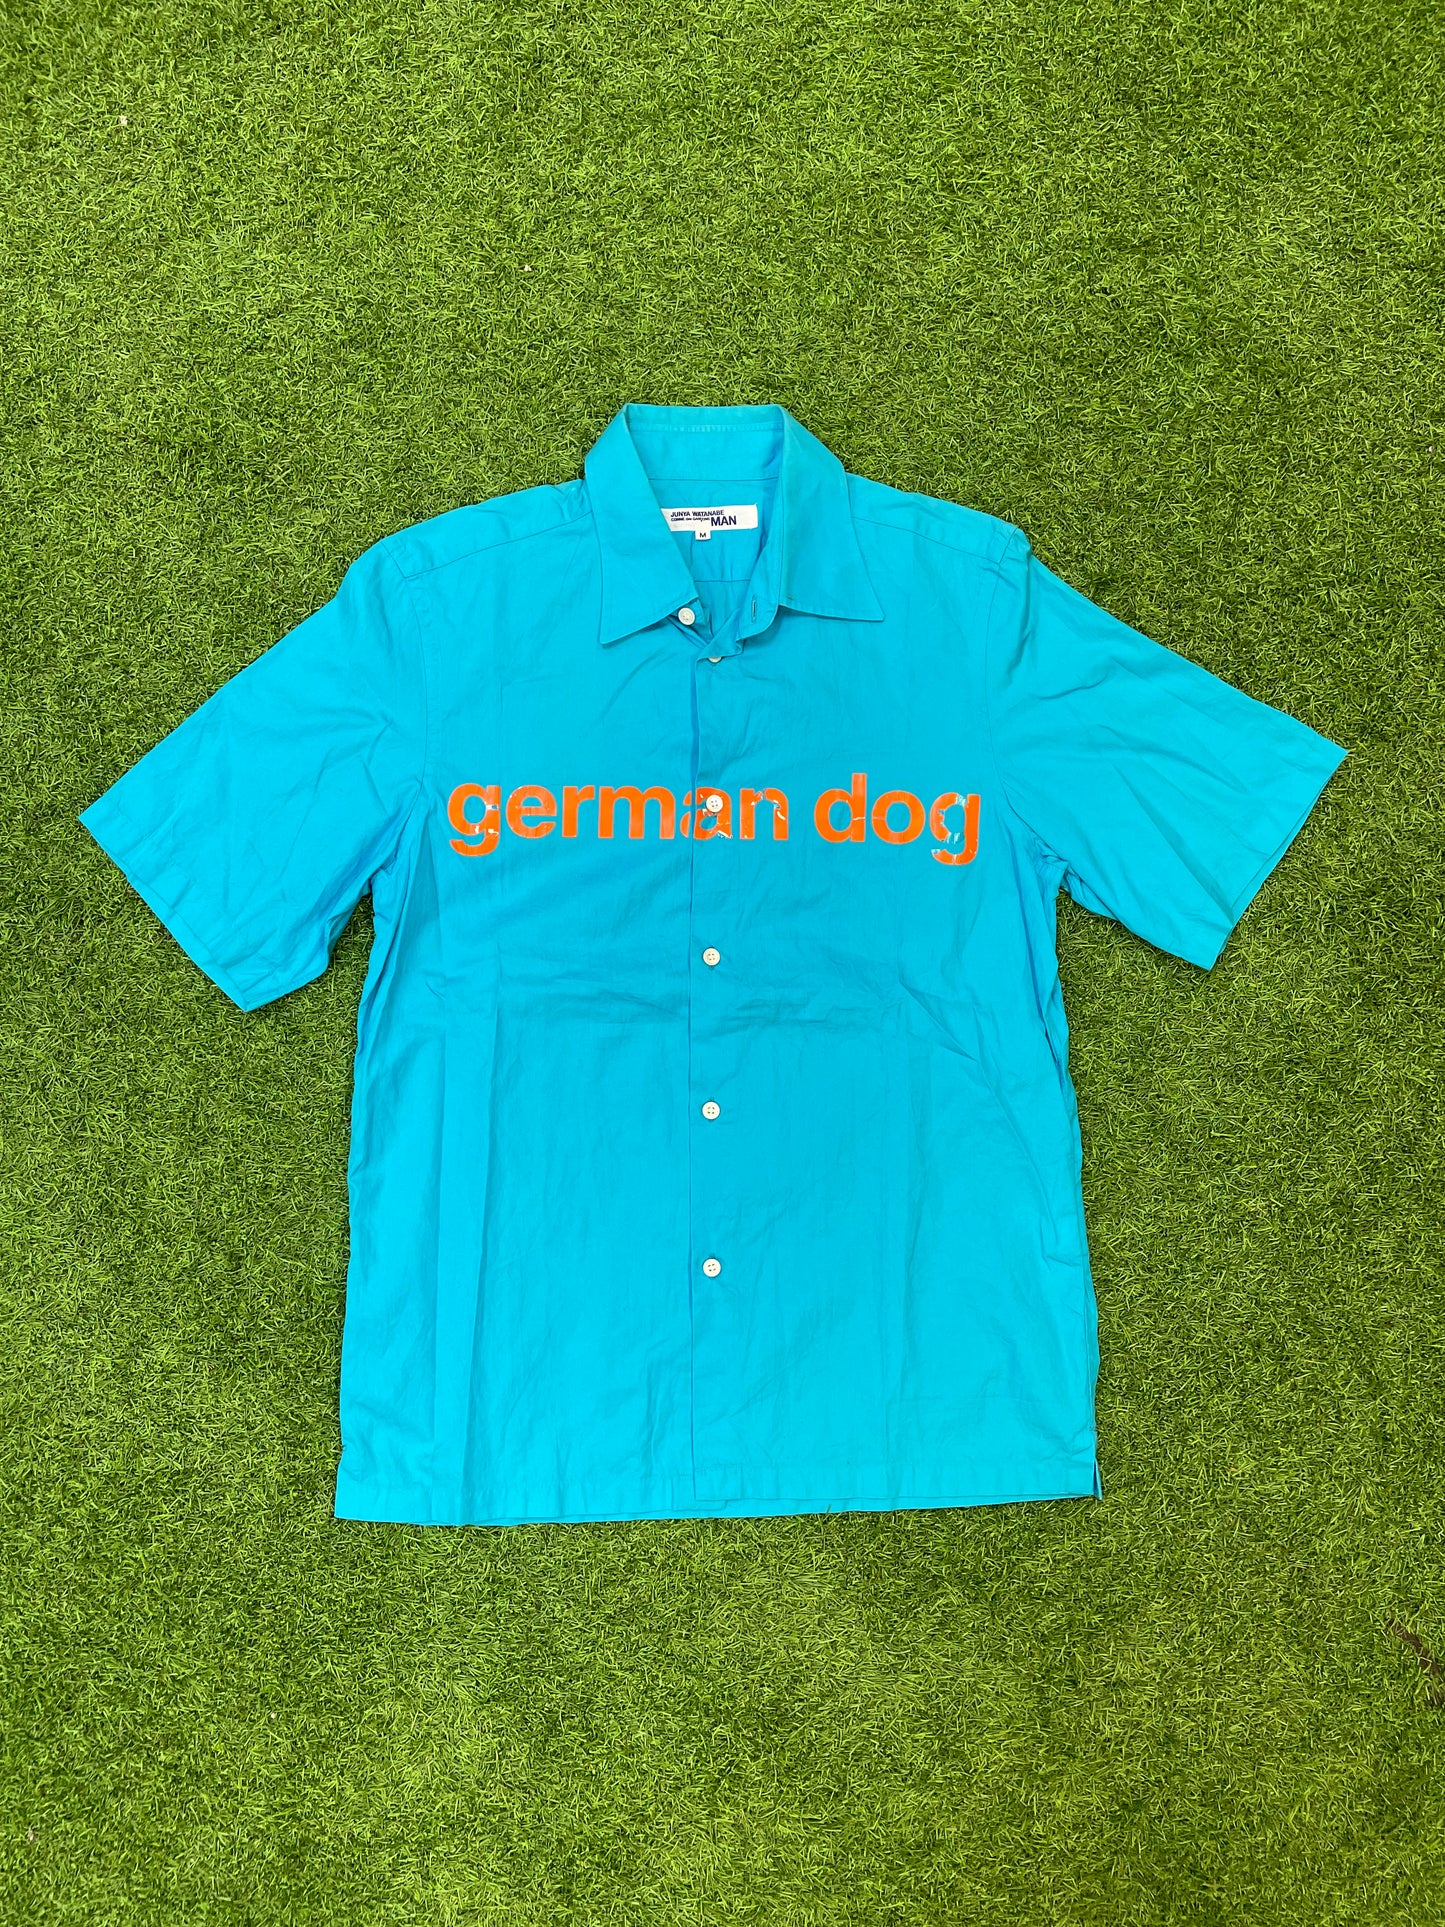 AD2001 Junya Watanabe “German Dog” Button Up Shirt